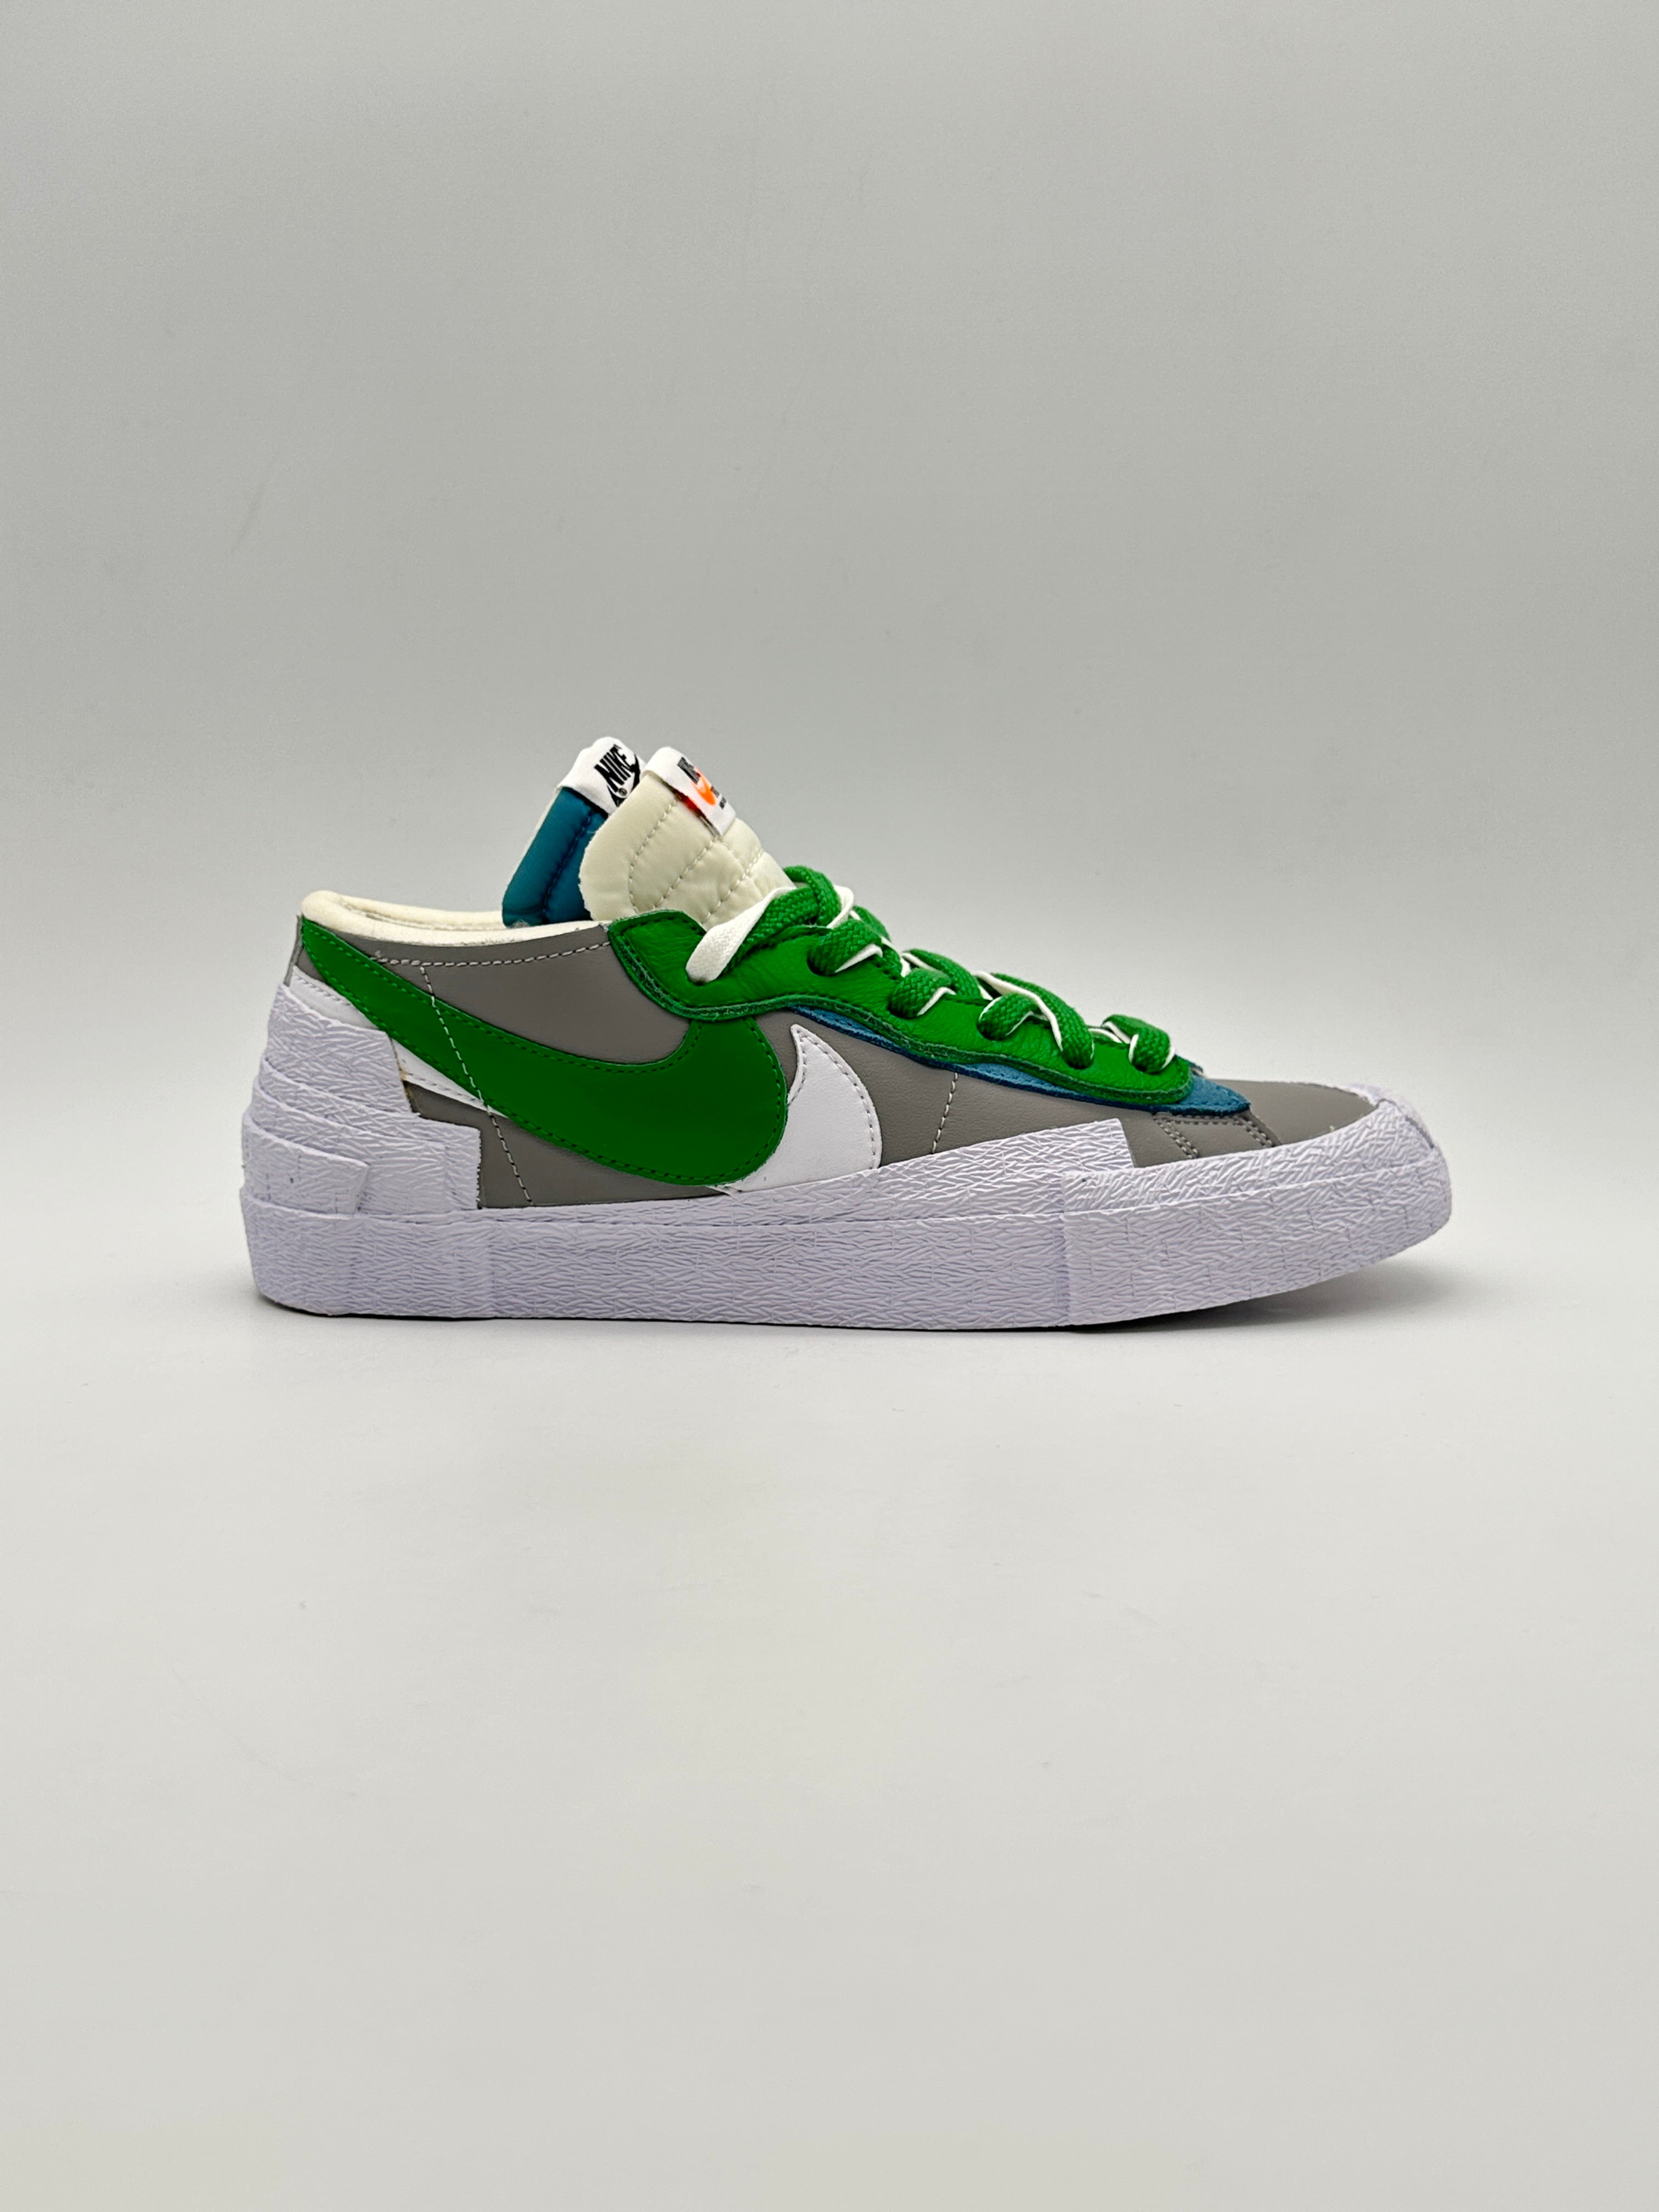 Blazer Low "Classic Green" Sneakers